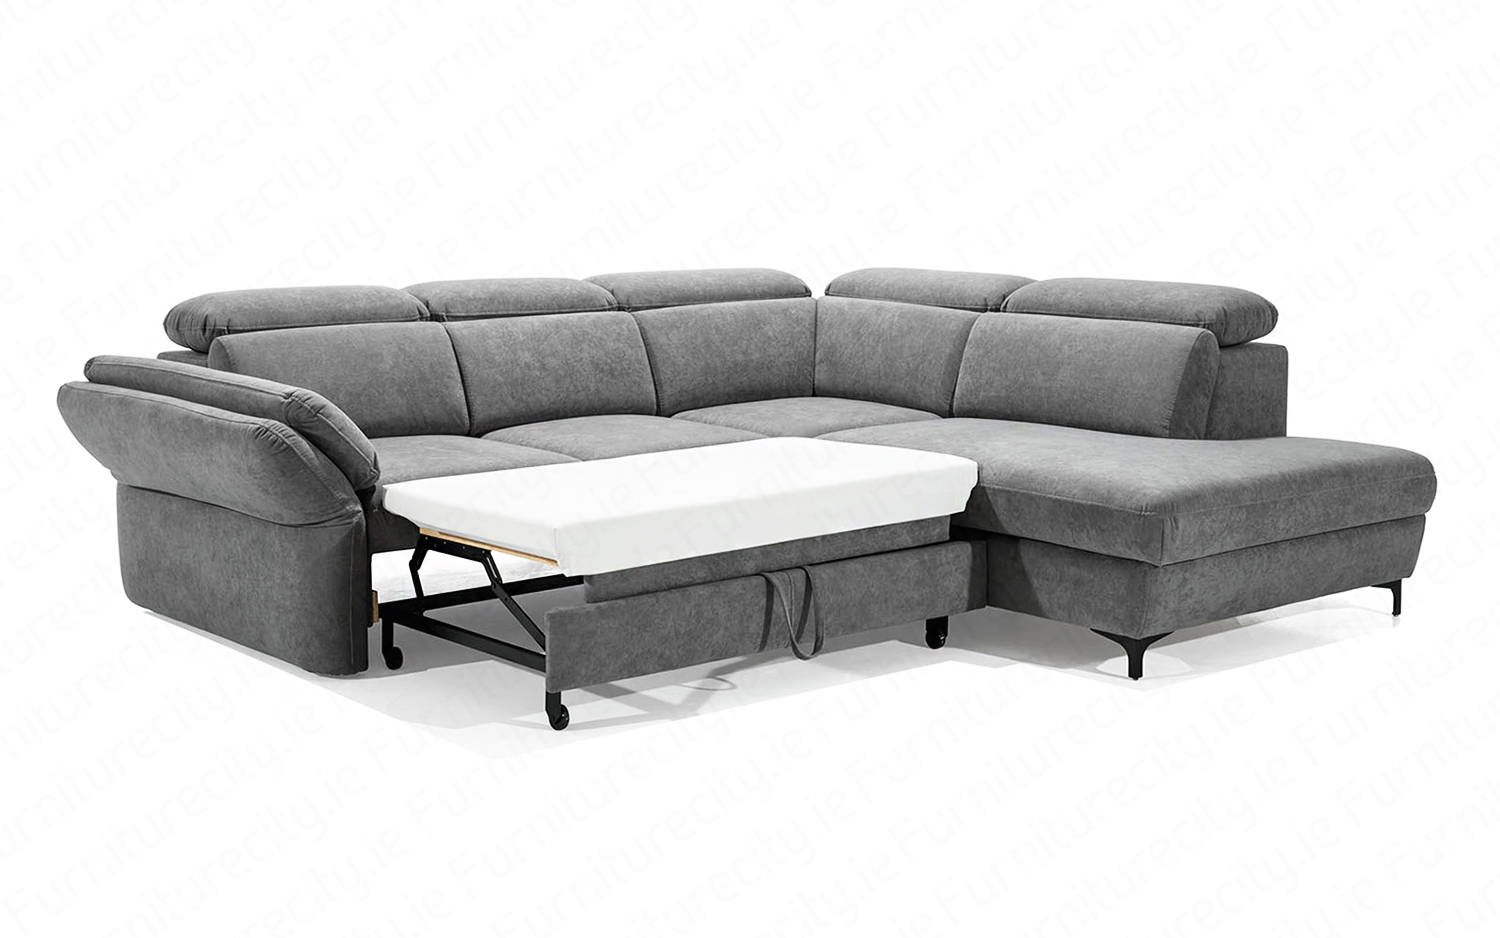 Sofa bed SERANO by Furniturecity.ie